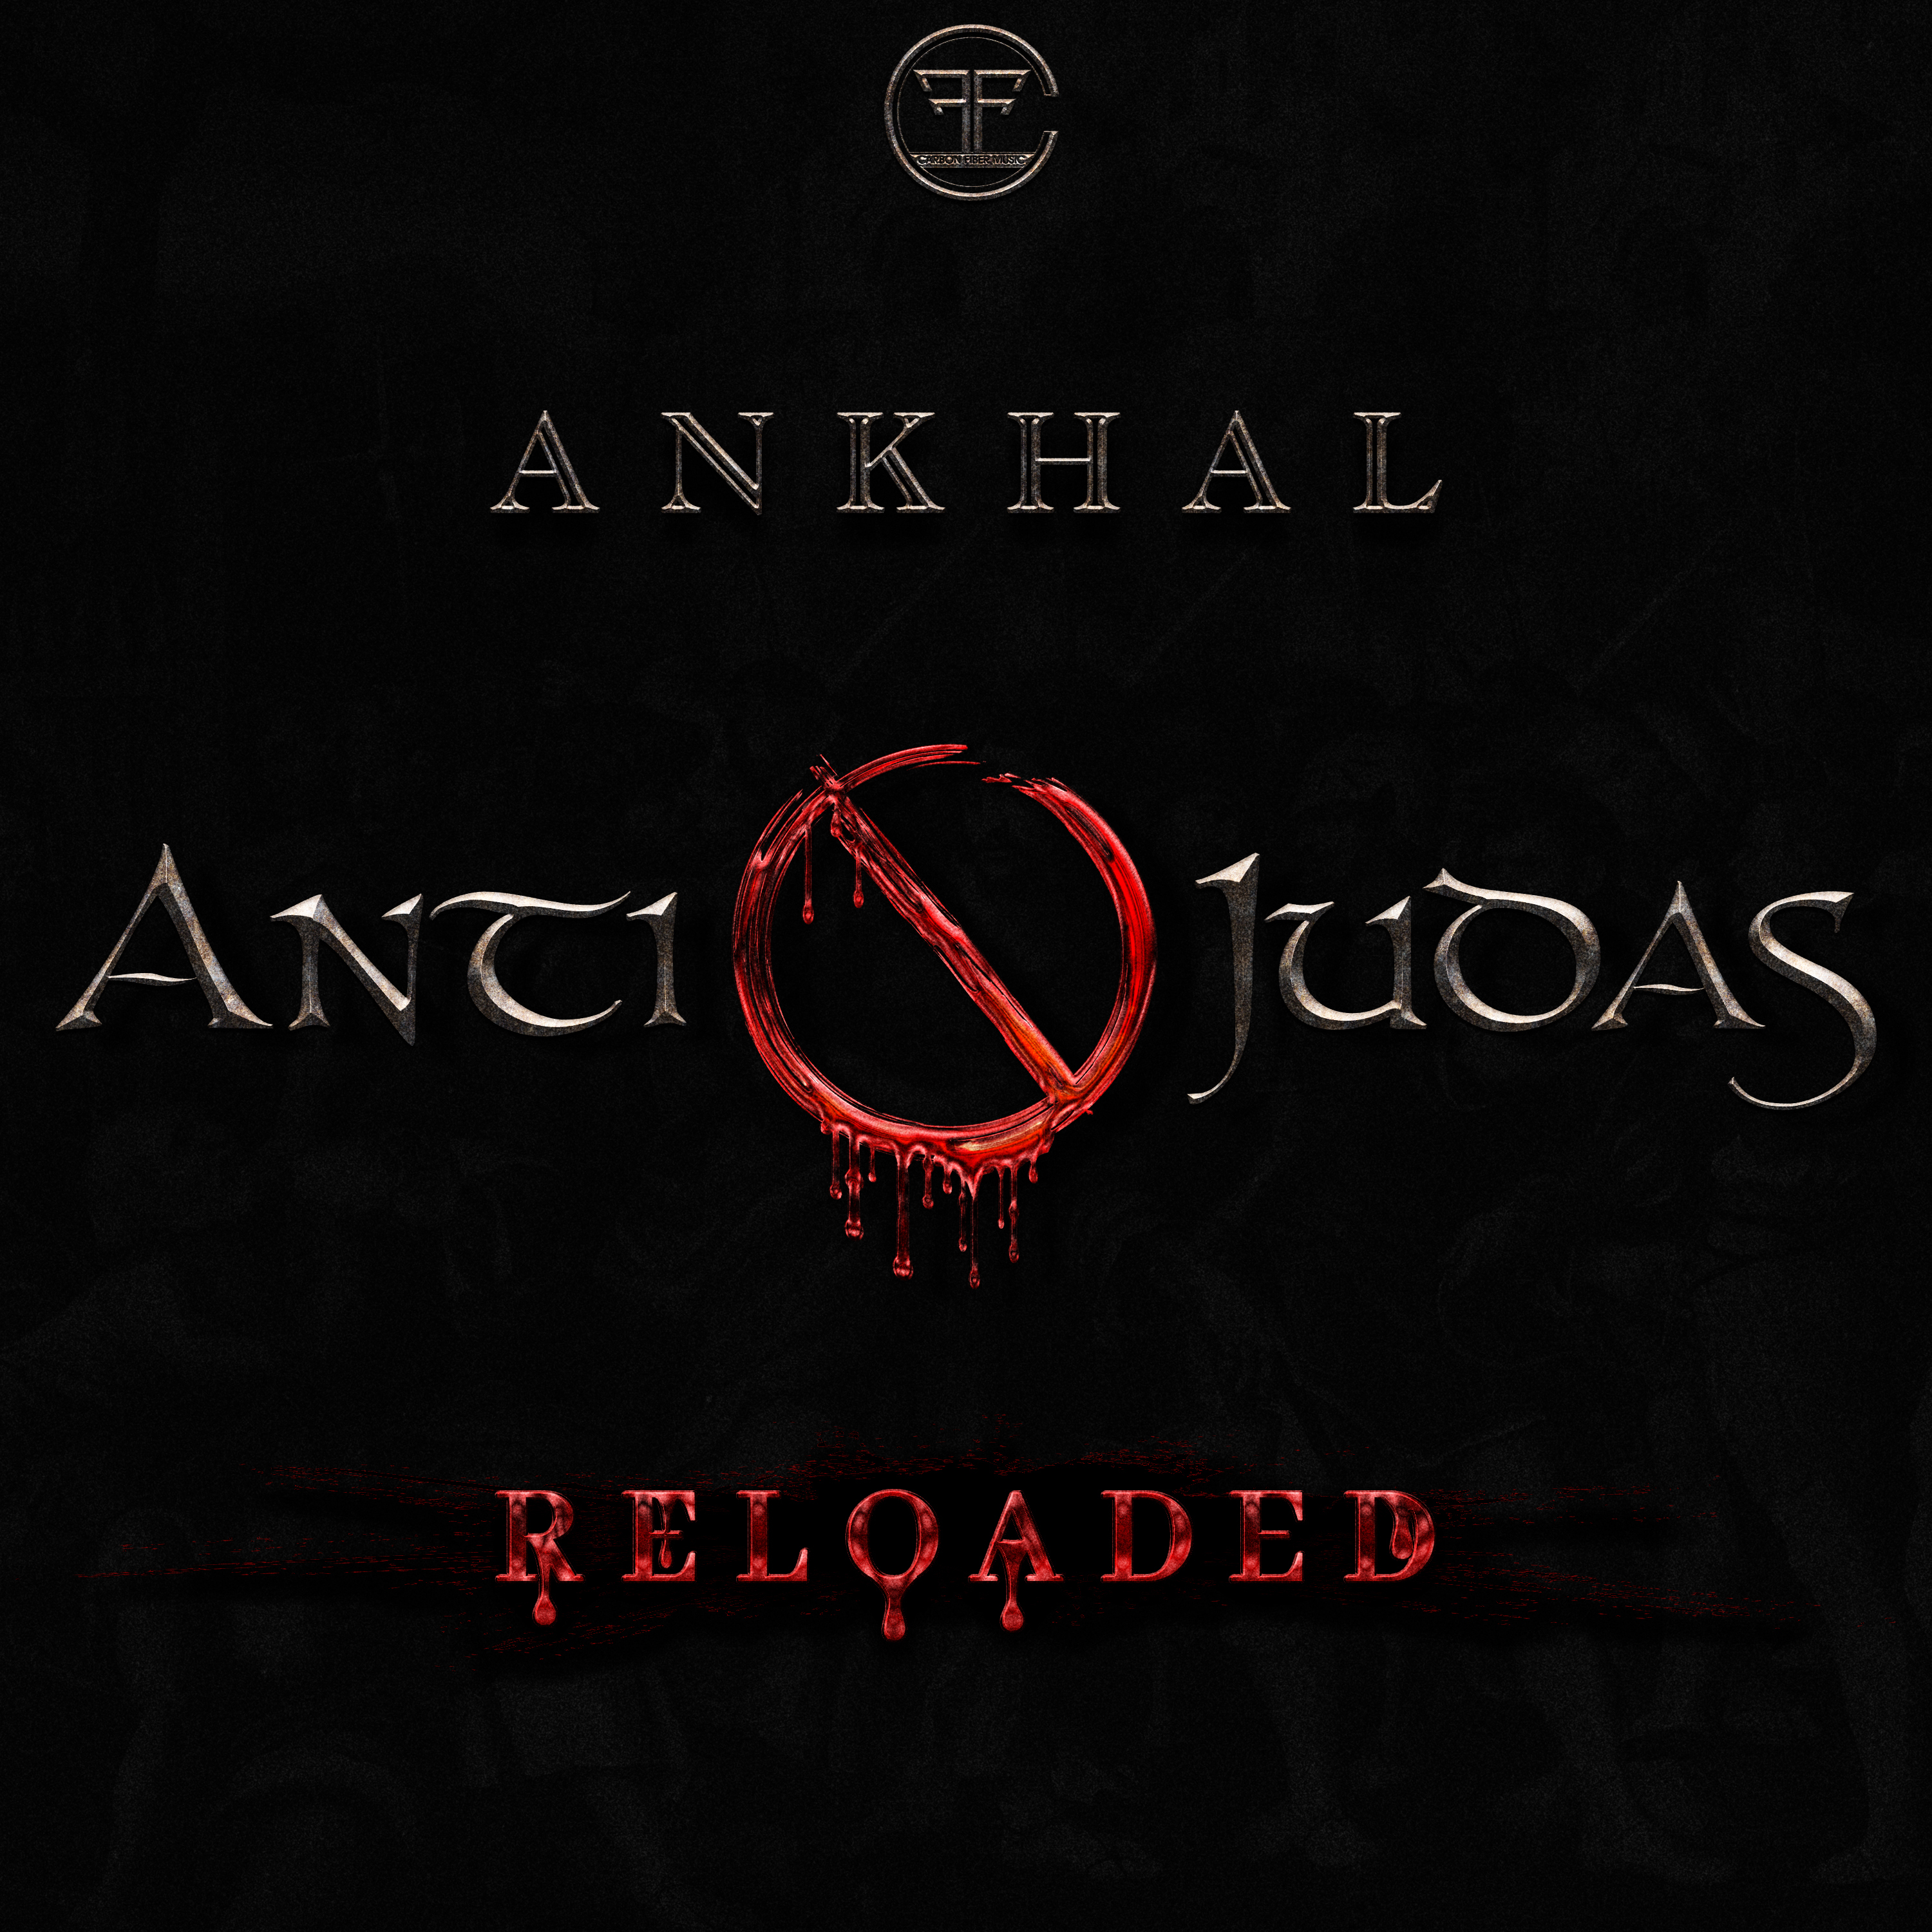 ANKHAL lanza nuevo álbum “Anti Judas Reloaded”